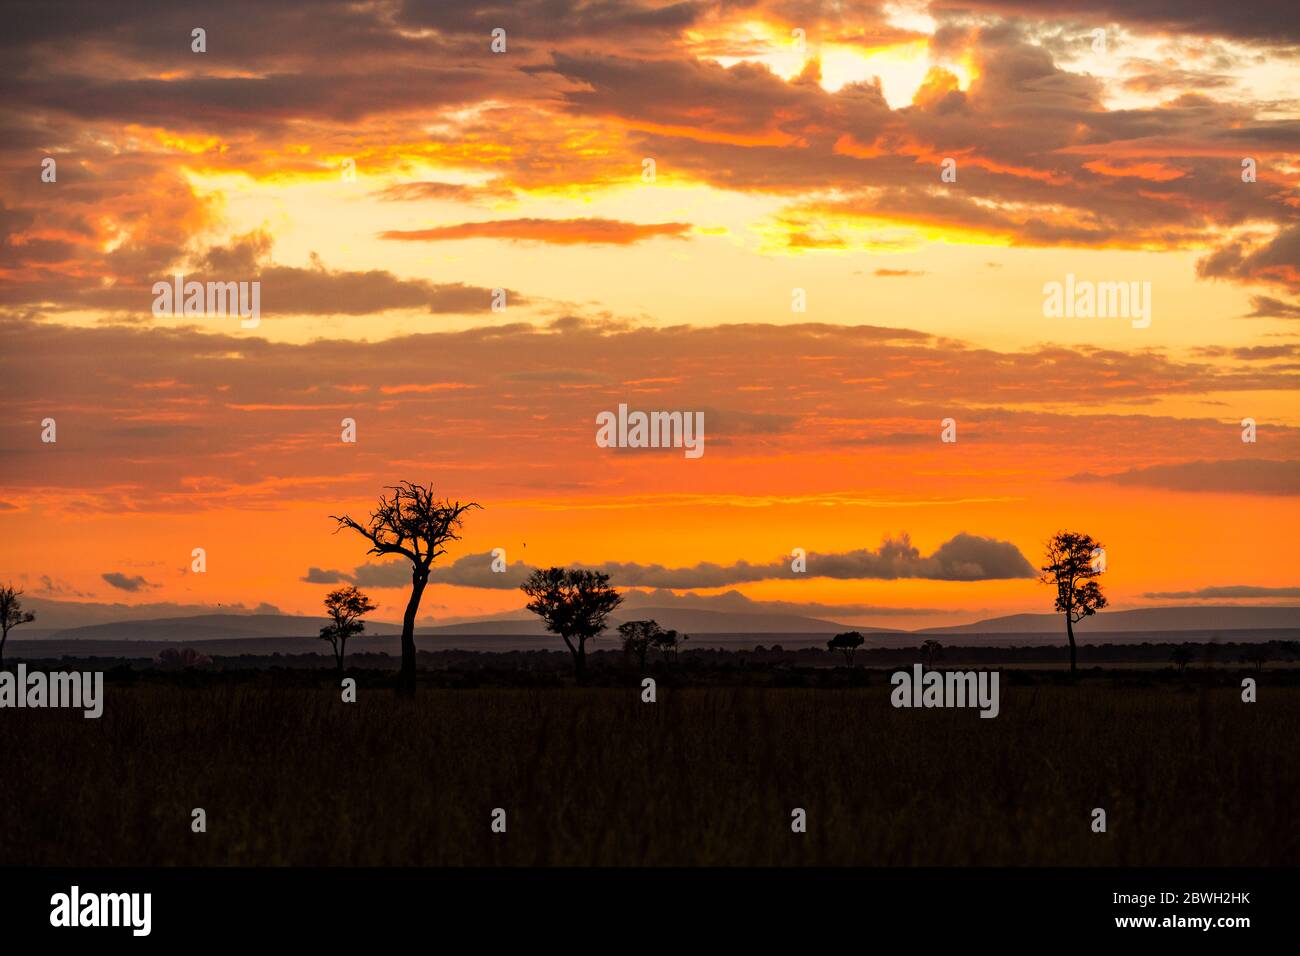 Goldener orangefarbener Sonnenuntergang in Kenia, Afrika mit Bäumen in Silhouette Stockfoto